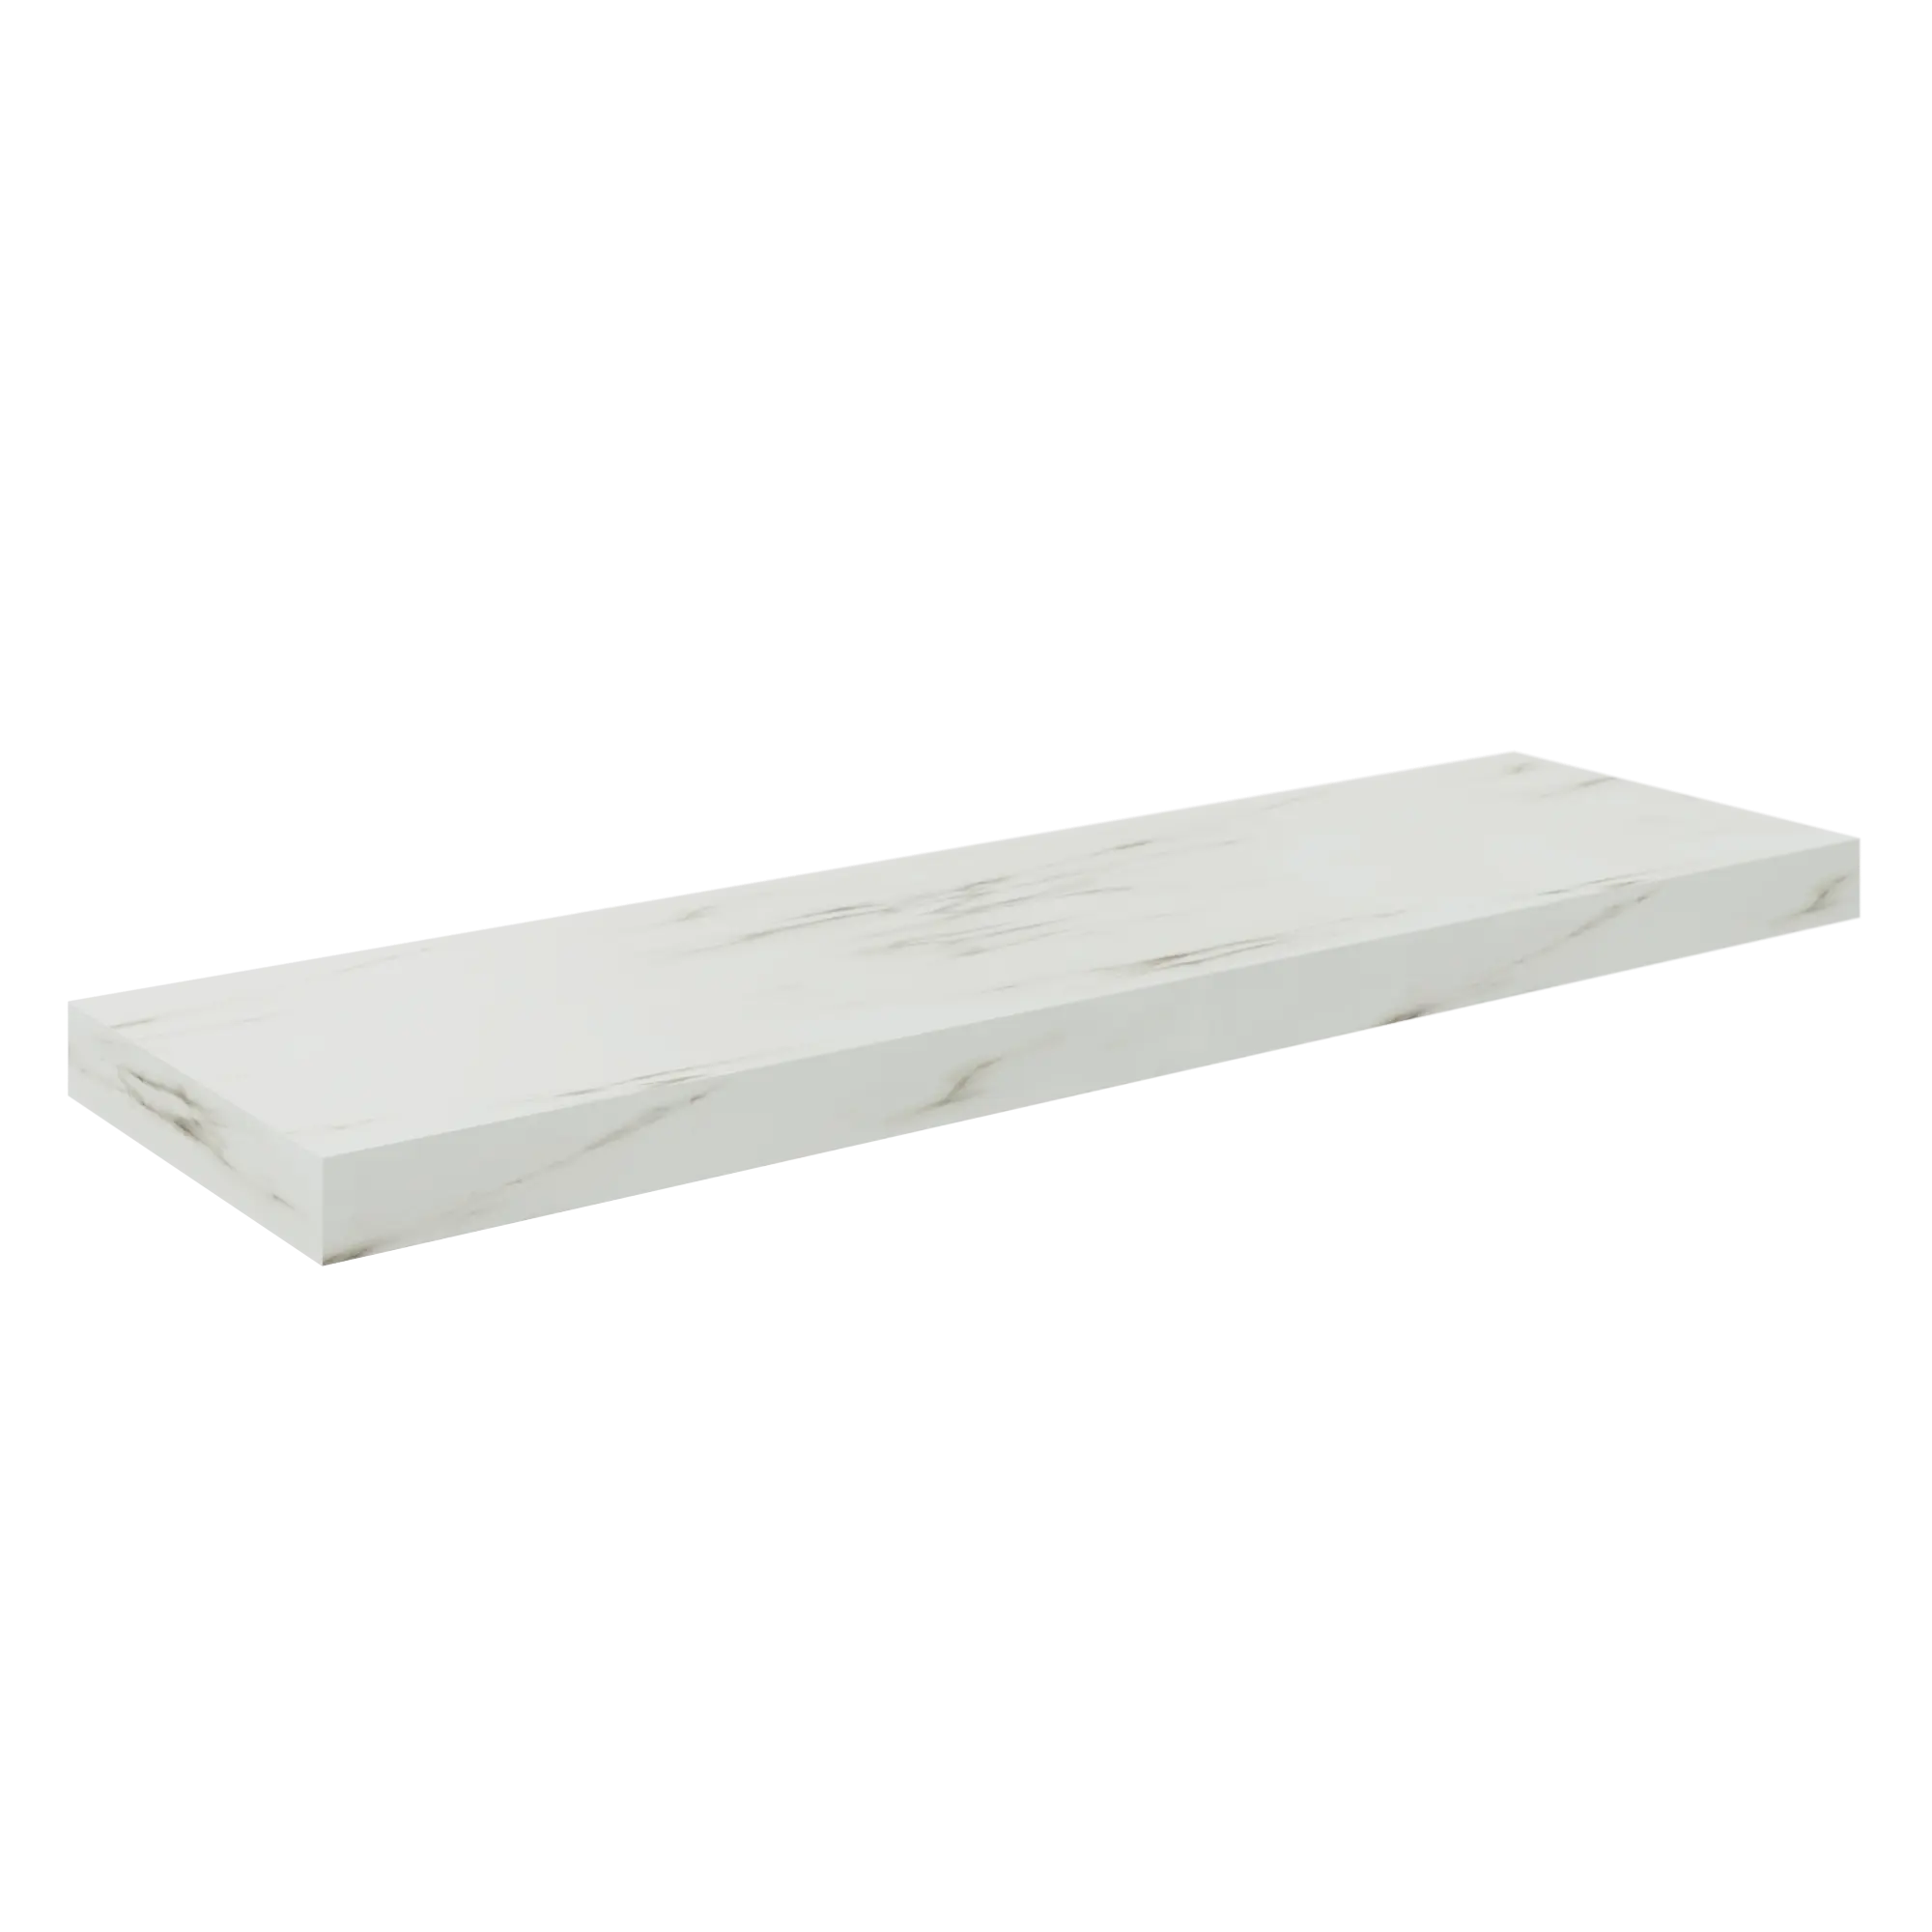 Estante spaceo rectangular en color blanco de 80x3.8x23.5cm